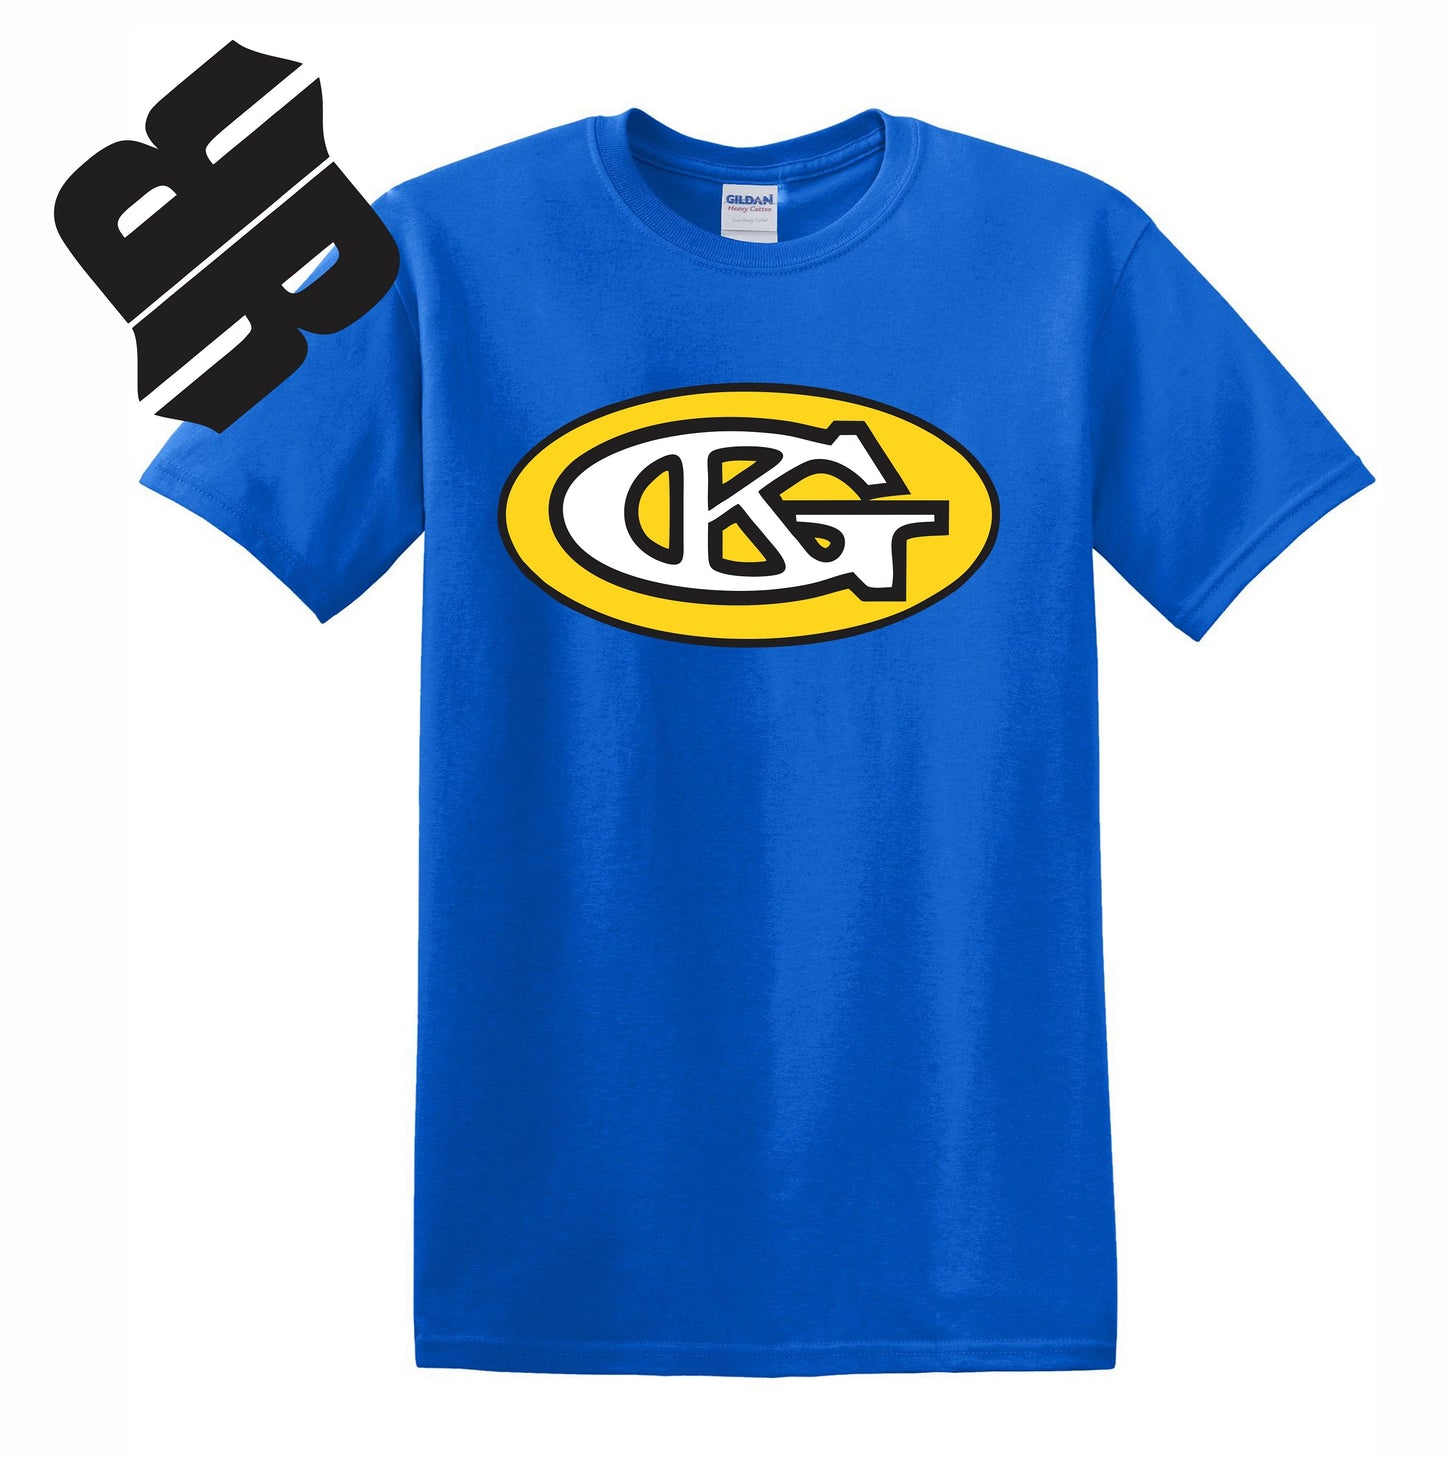 Skate Men's Shirt - CKG (Blue) - MYSTYLEMYCLOTHING